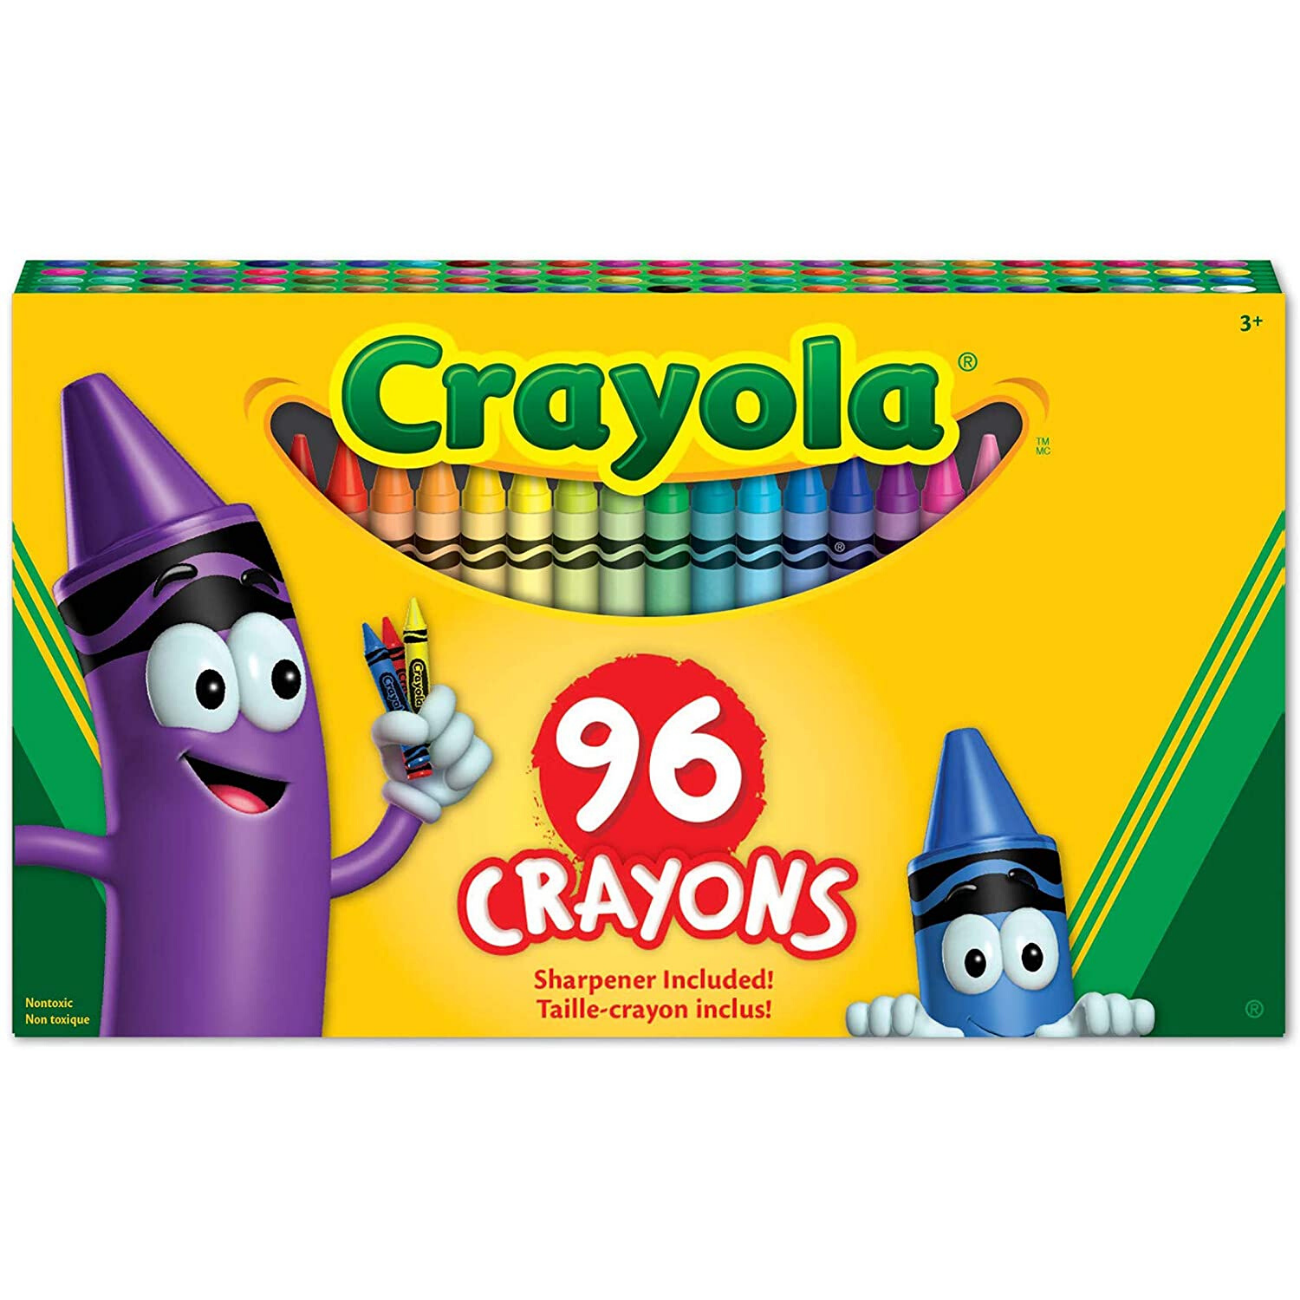 Crayola Crayons – Child's Play